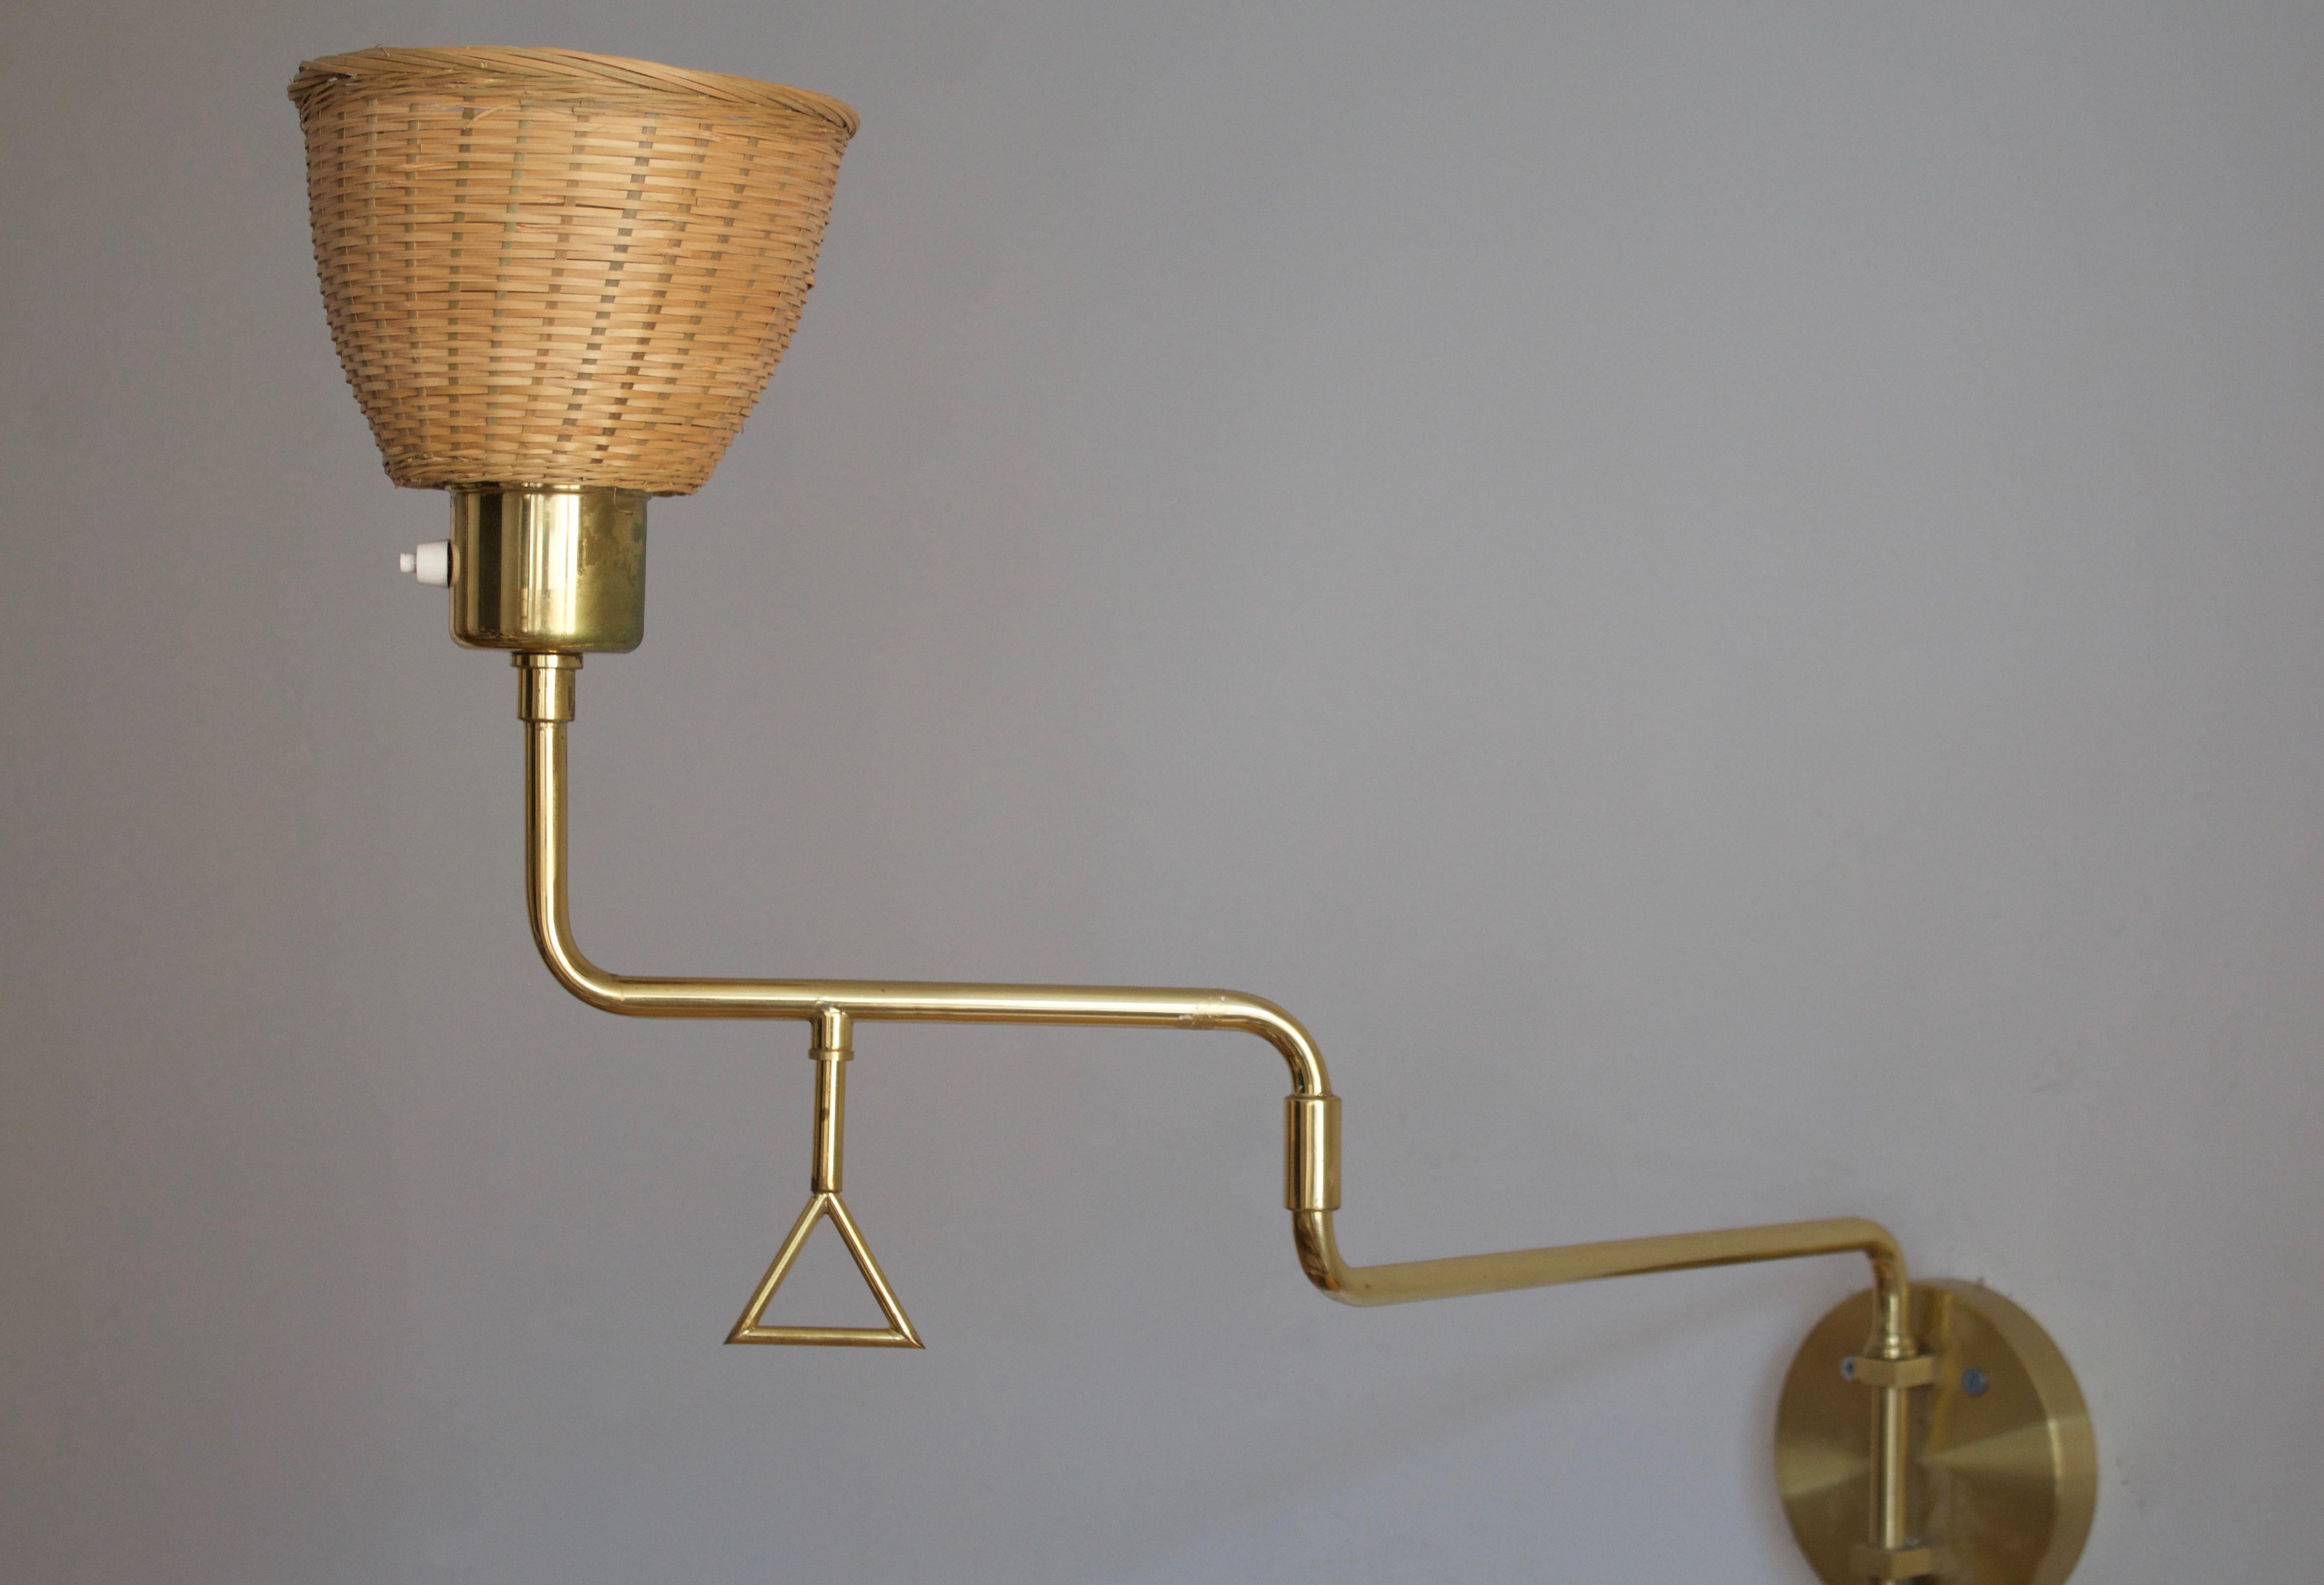 Danish Swedish Designer, Adjustable Wall Light, Brass, Rattan, Sweden, 1970s